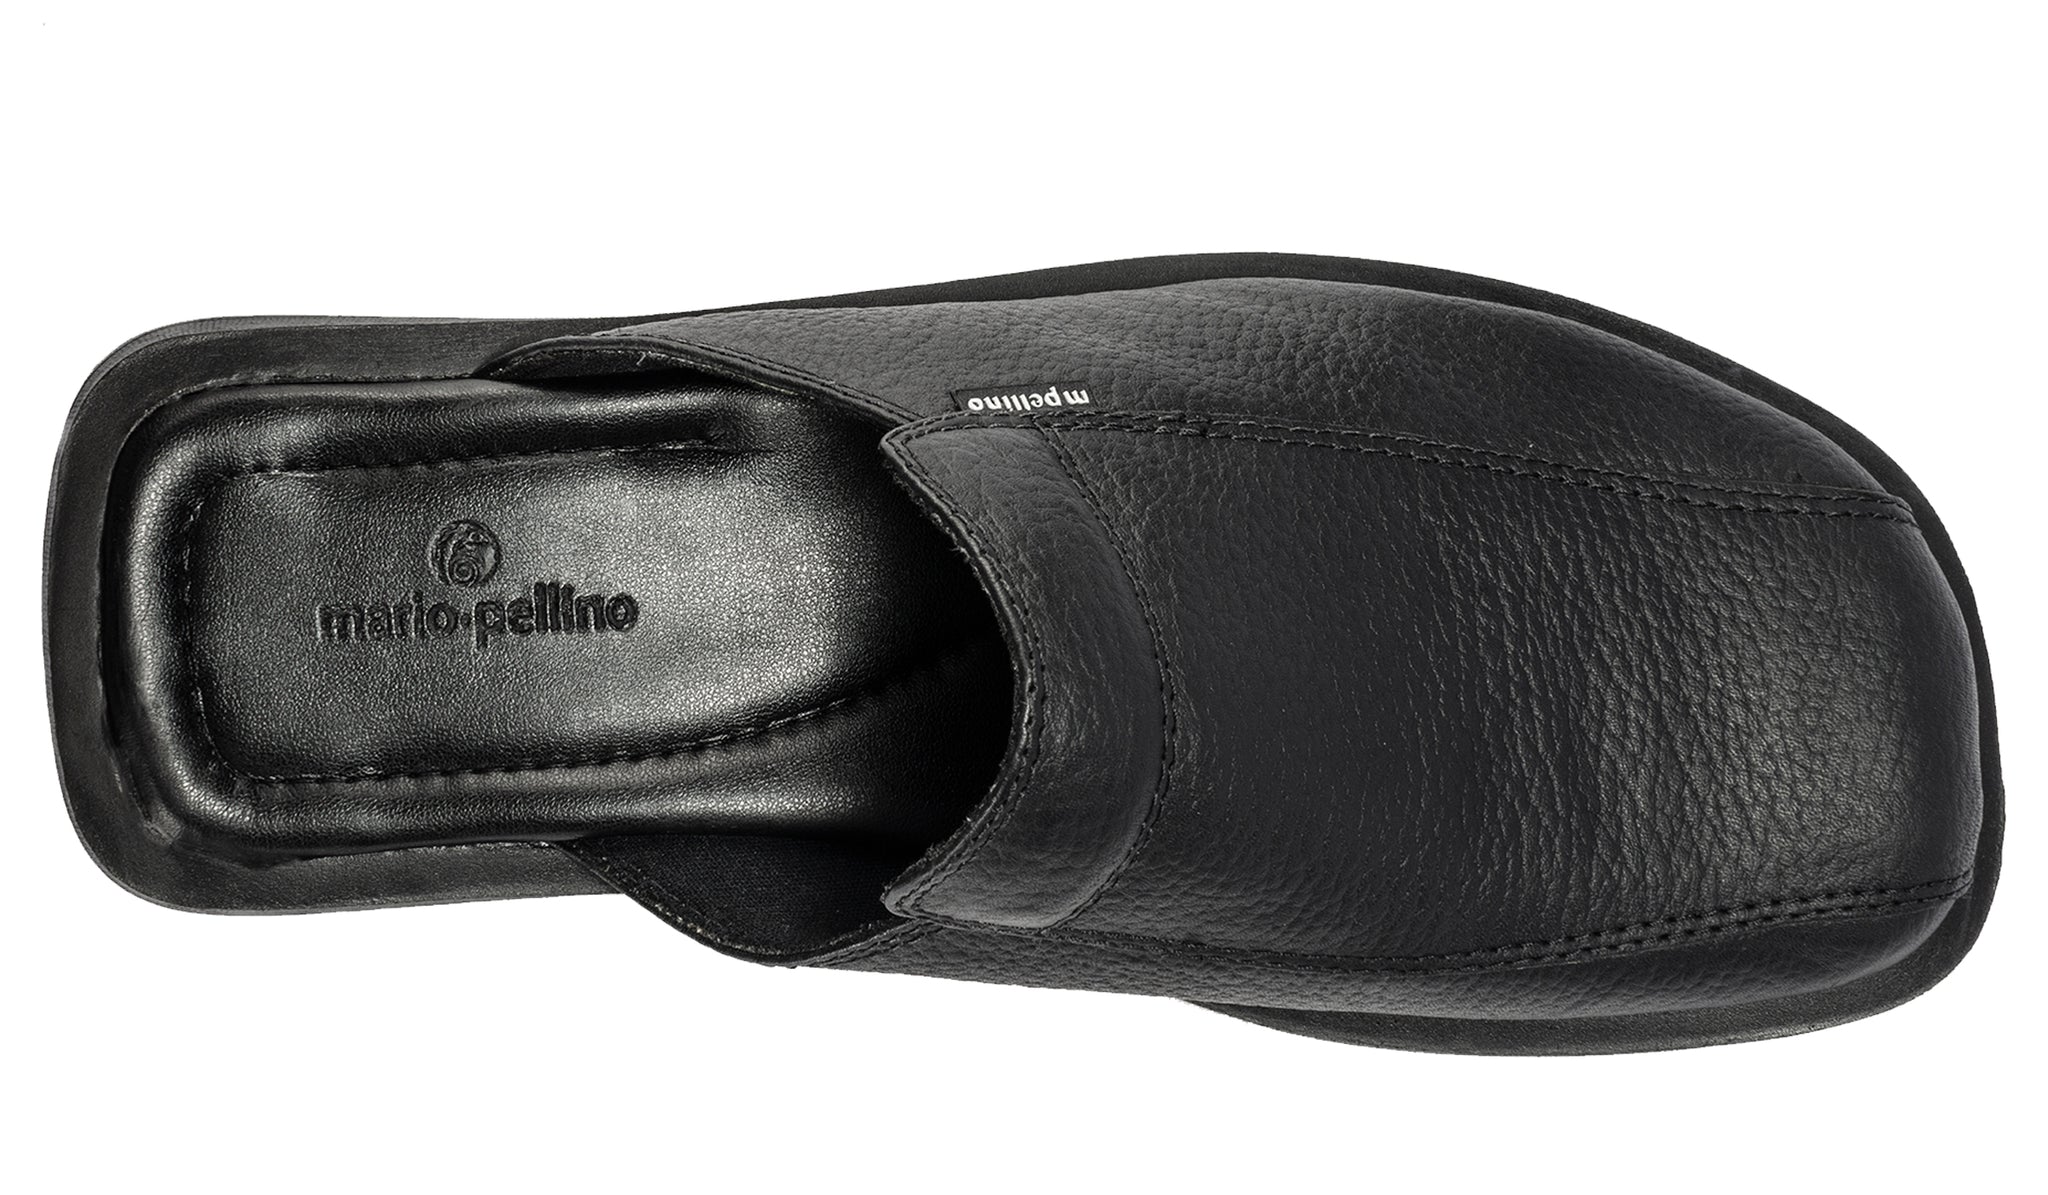 mens black leather sandals closed toe